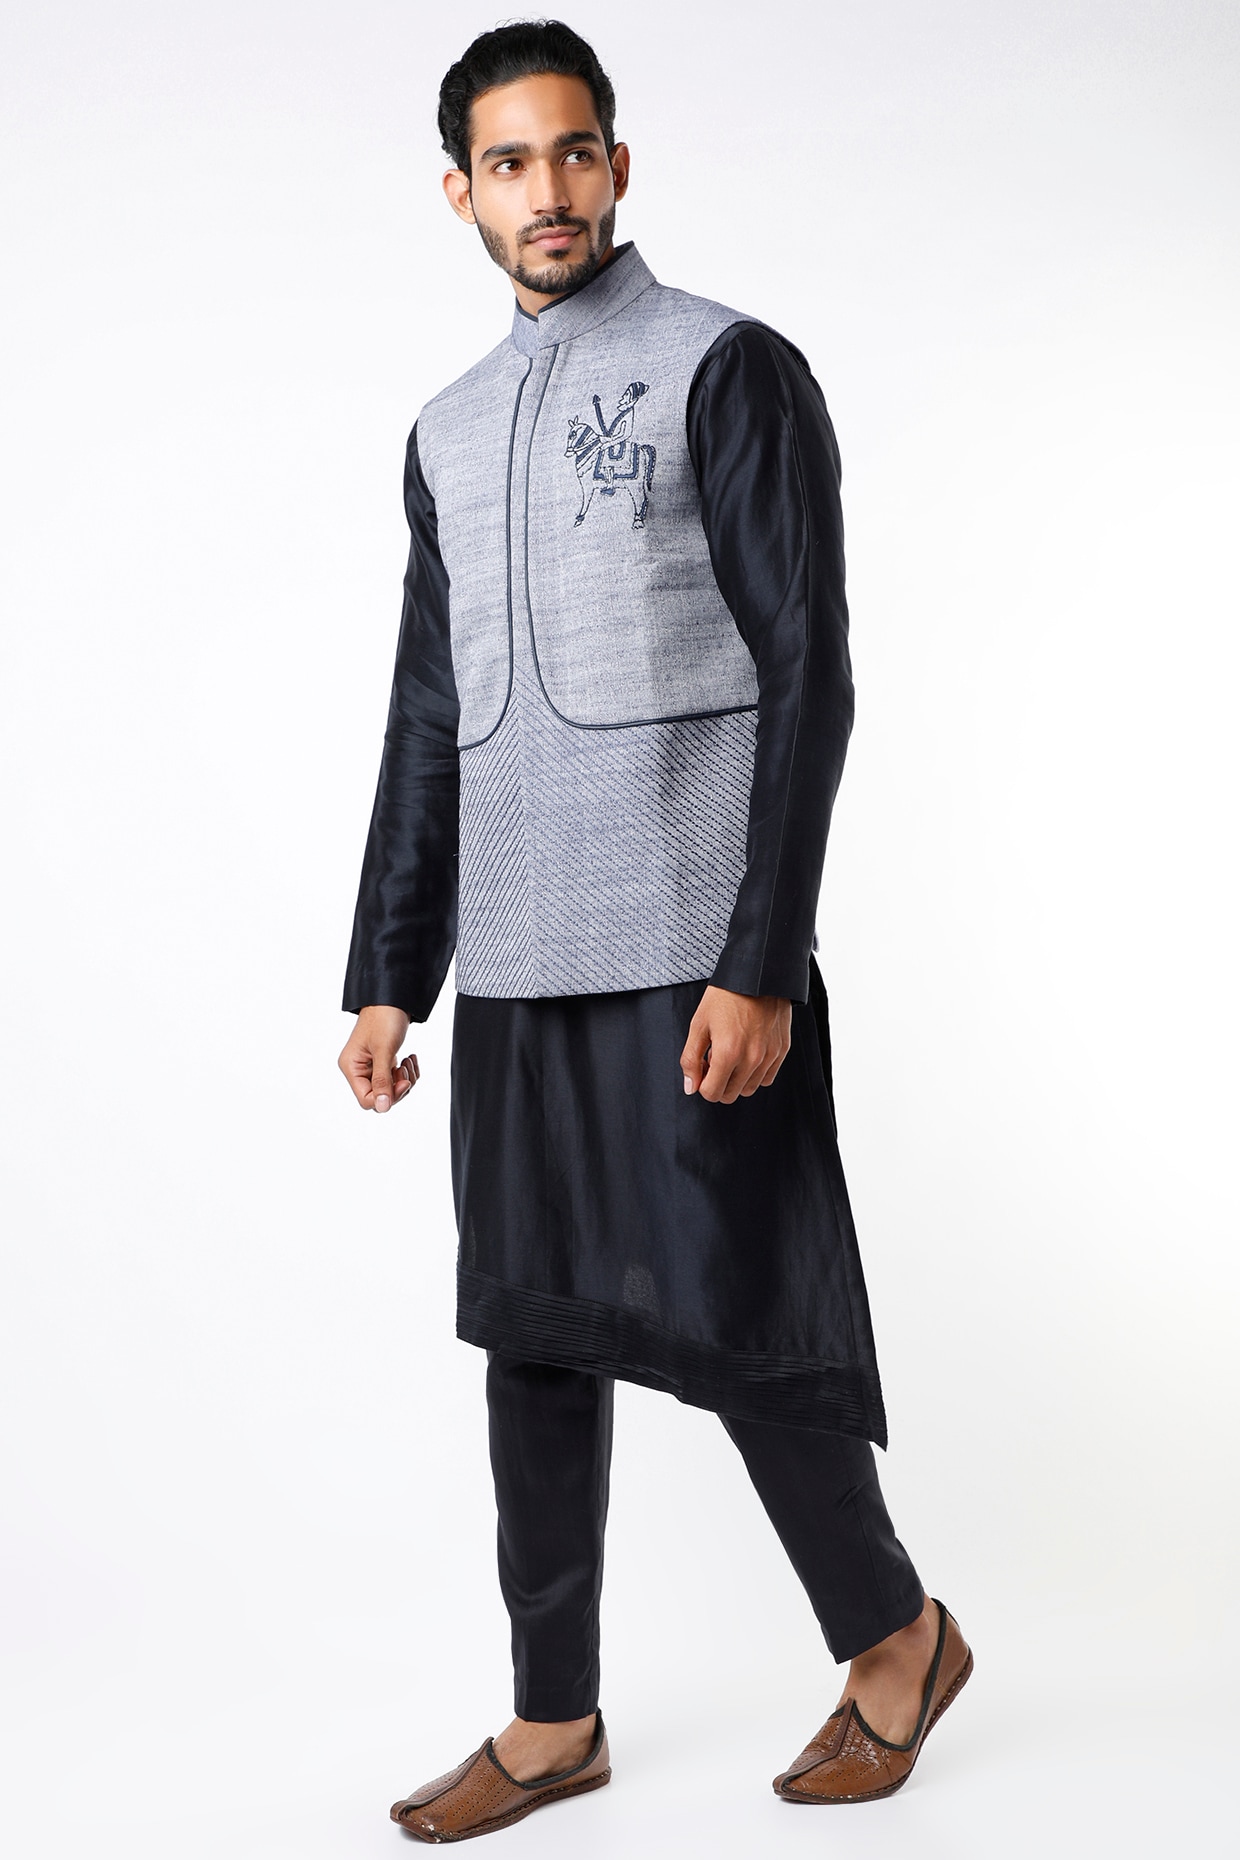 Nehru Jacket Online: Buy Nehru Jacket for Men in Latest Designs | Utsav  Fashion